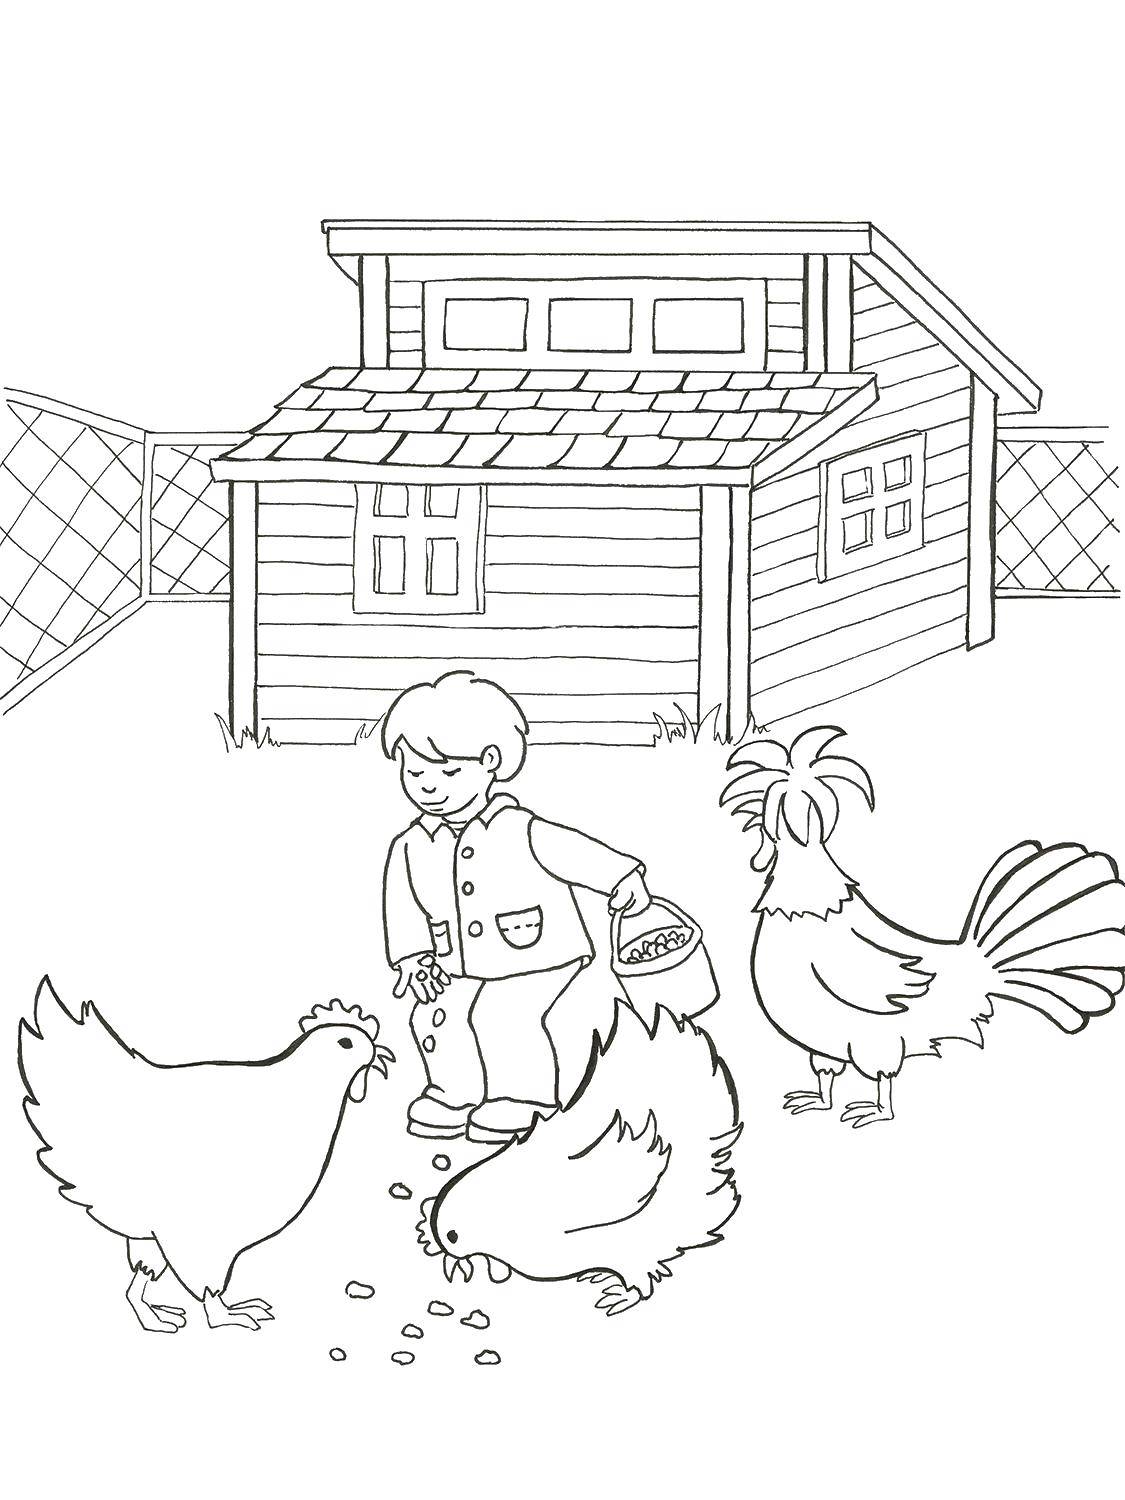 Coloring Boy feeding chickens. Category farm. Tags:  farm.